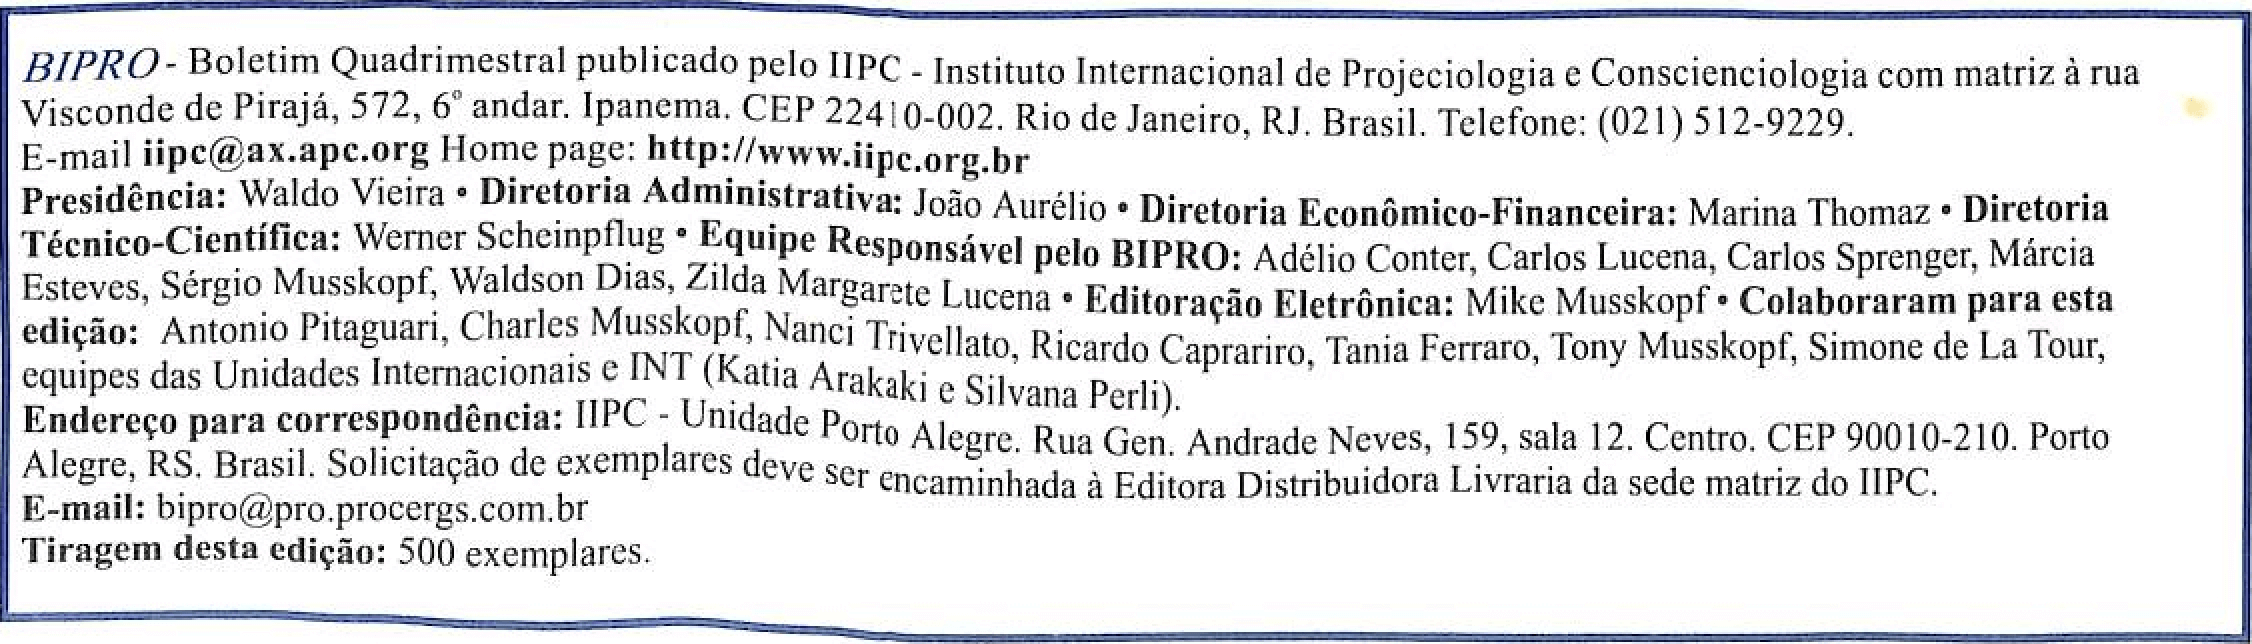 iipc-bi-vol4-n10-1997.pdf